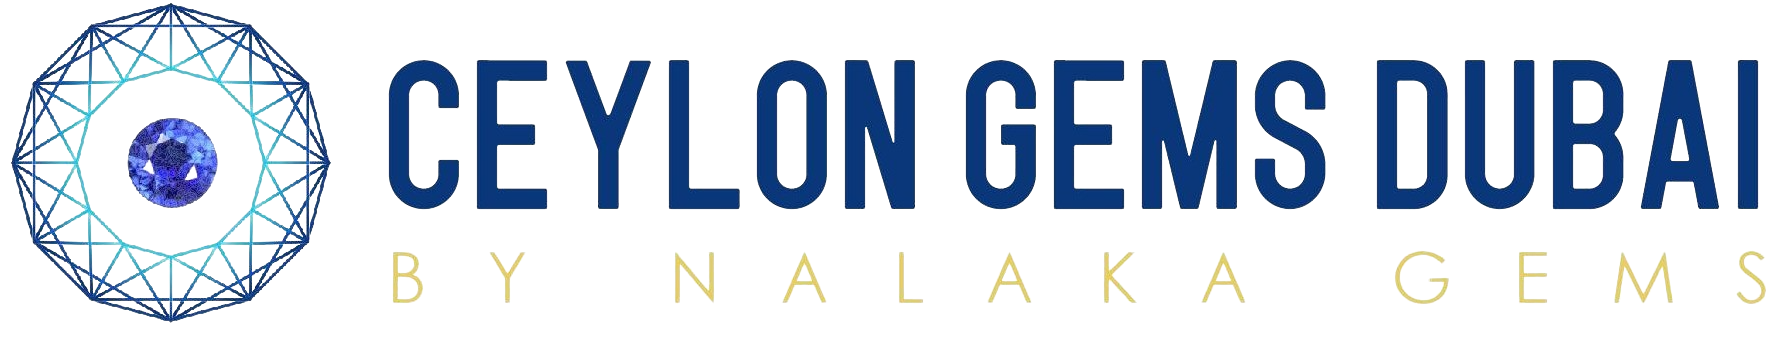 Ceylong_Gem_Logo_color__1_-page-001-removebg.png